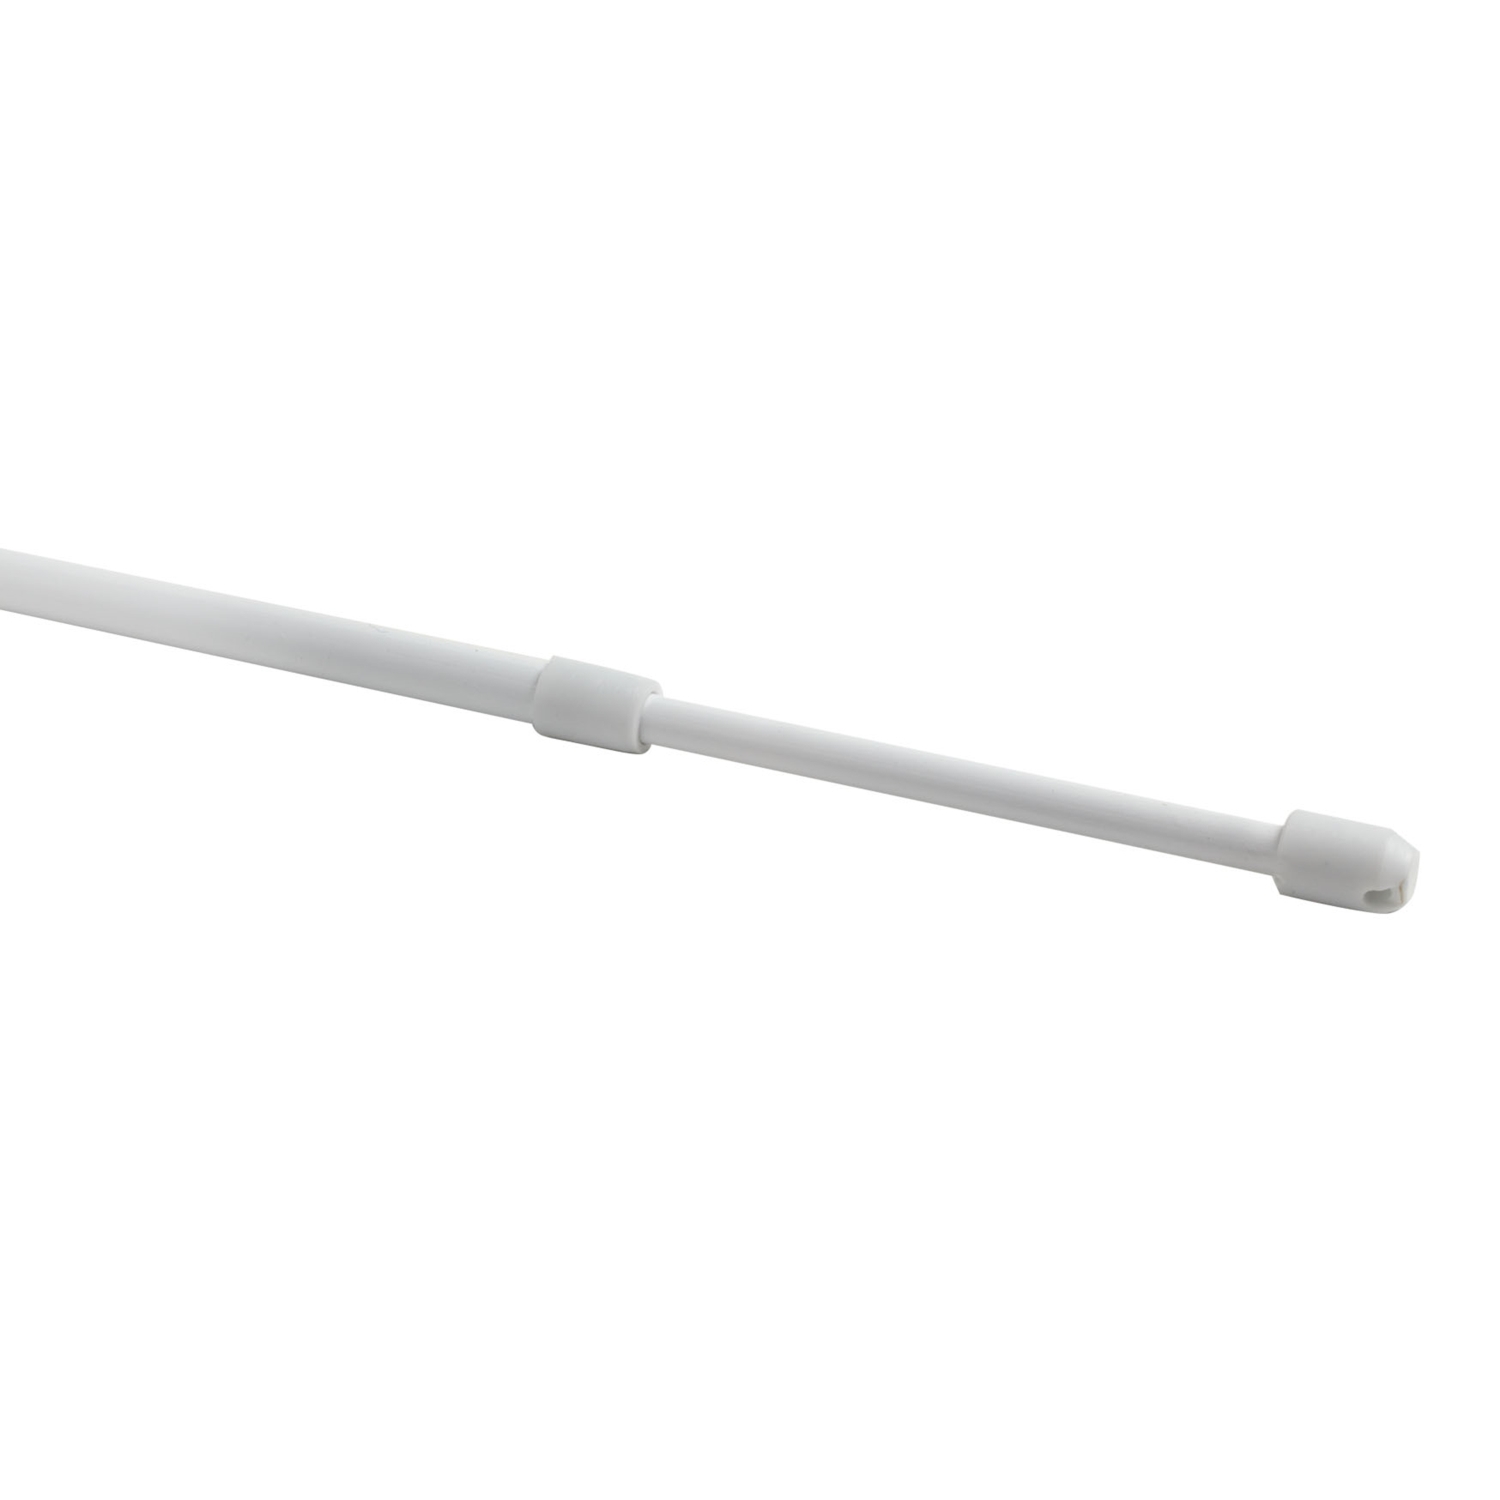 180-305cm White Simply Net Rod Image